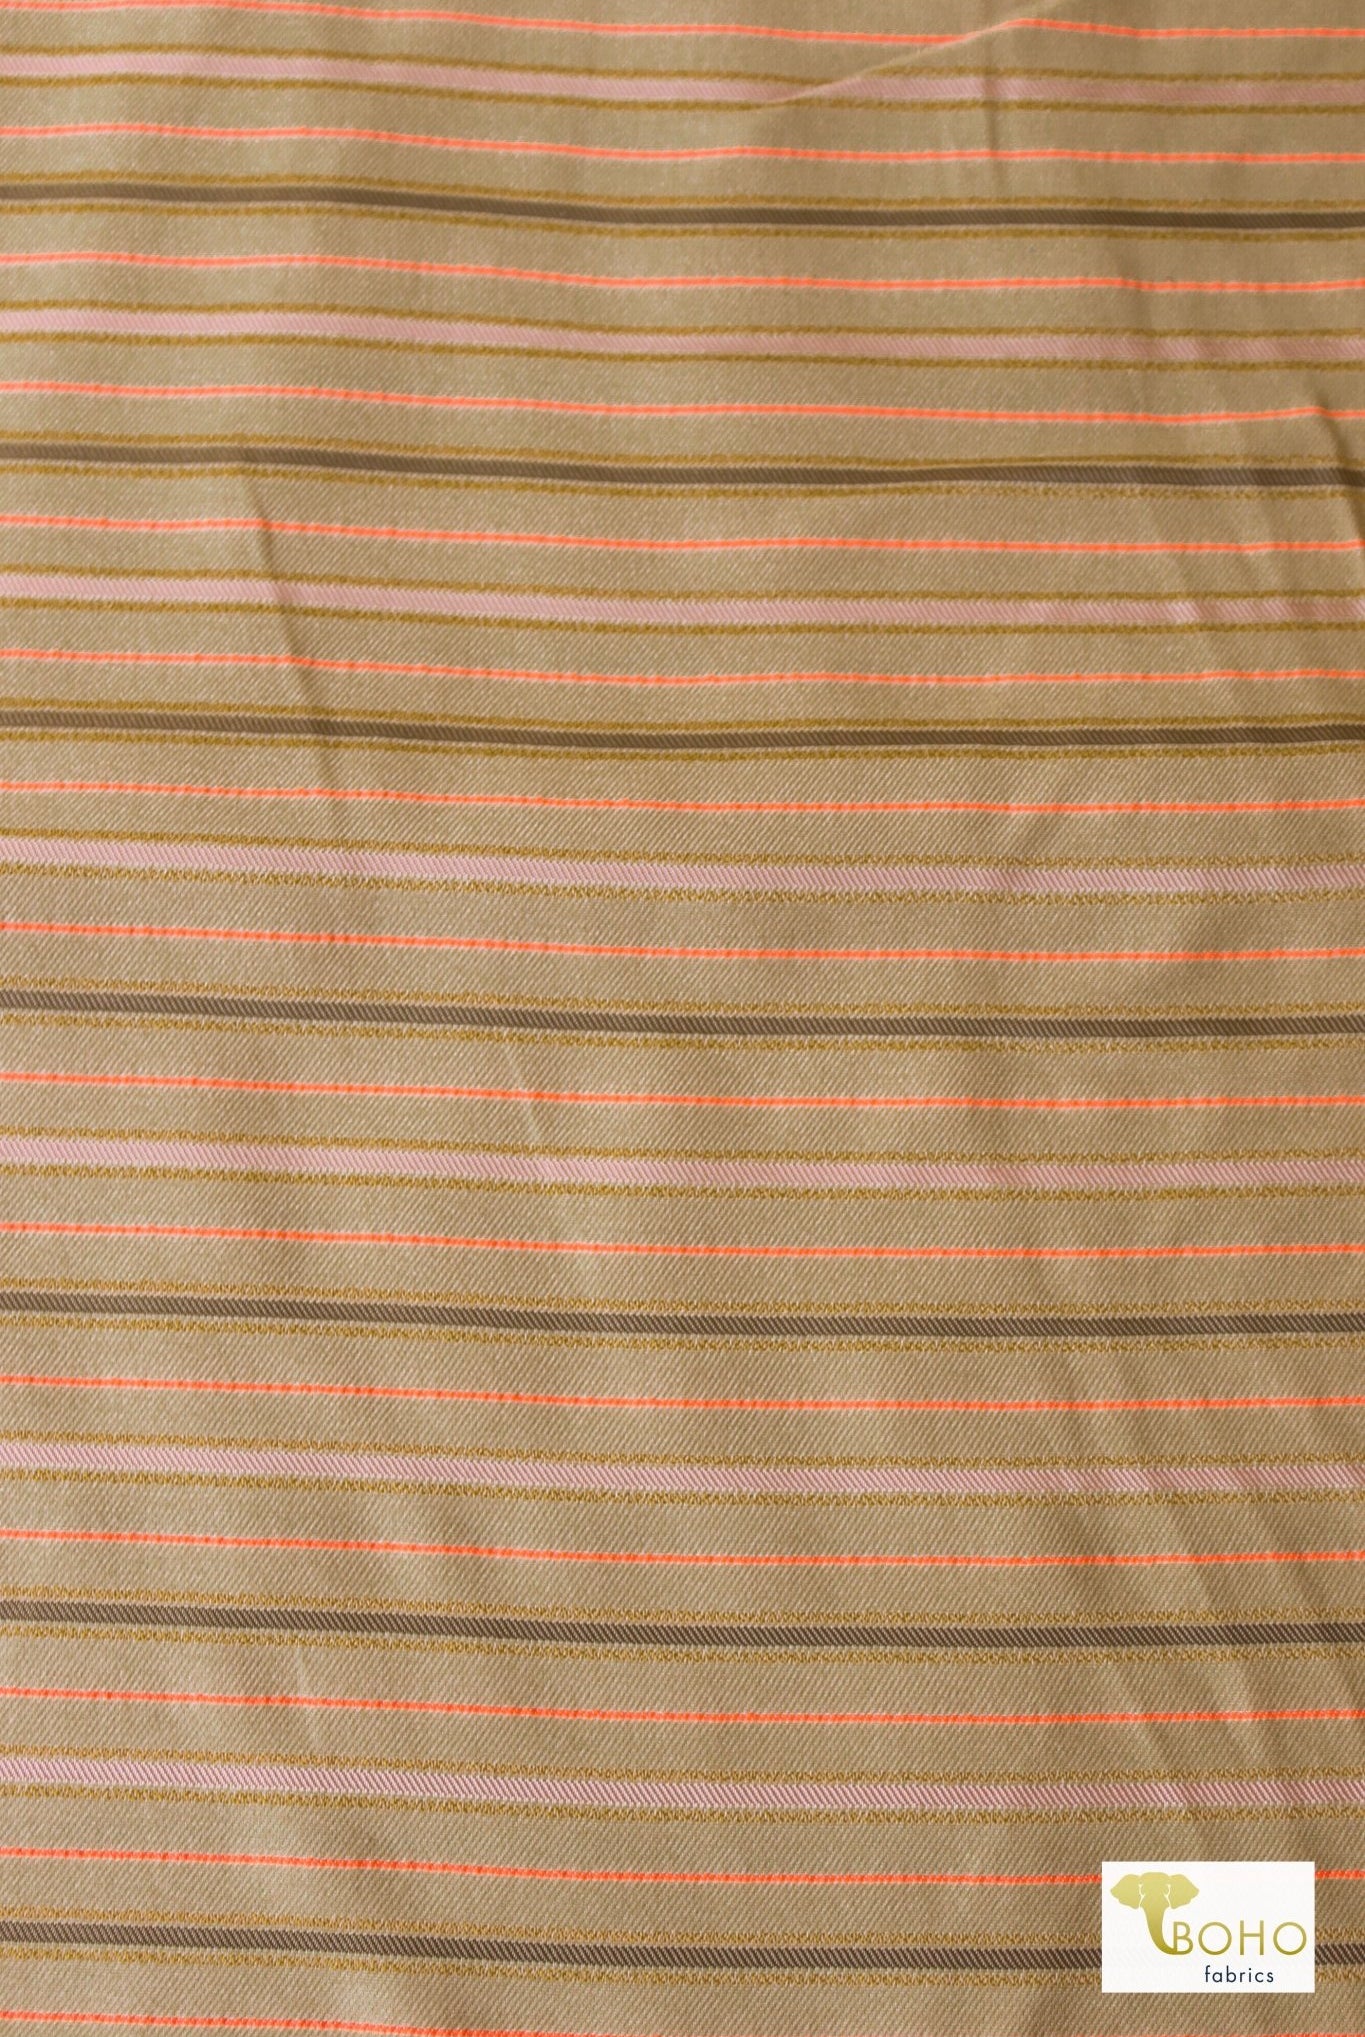 Gold Orange Stripes Woven Twill - Boho Fabrics